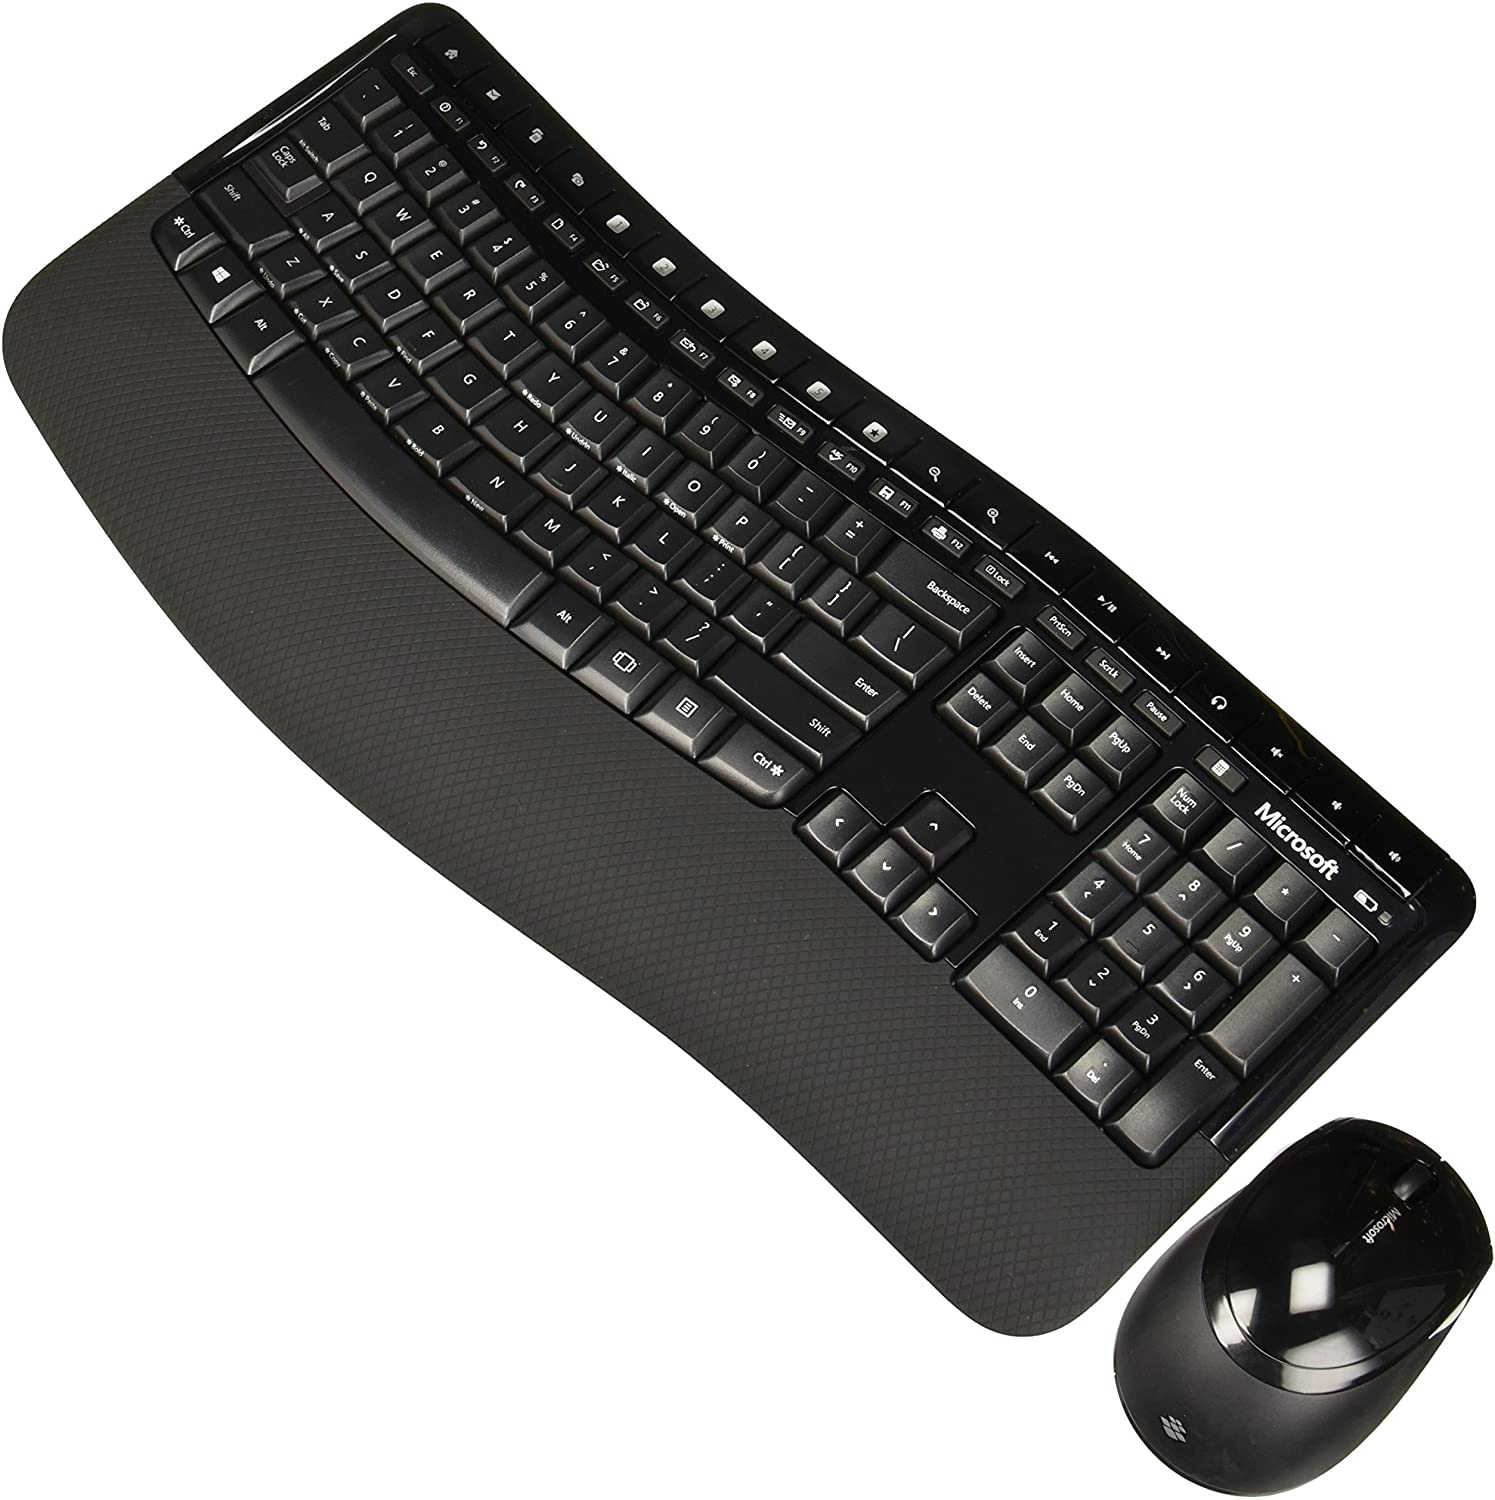 microsoft wireless keyboard software for mac